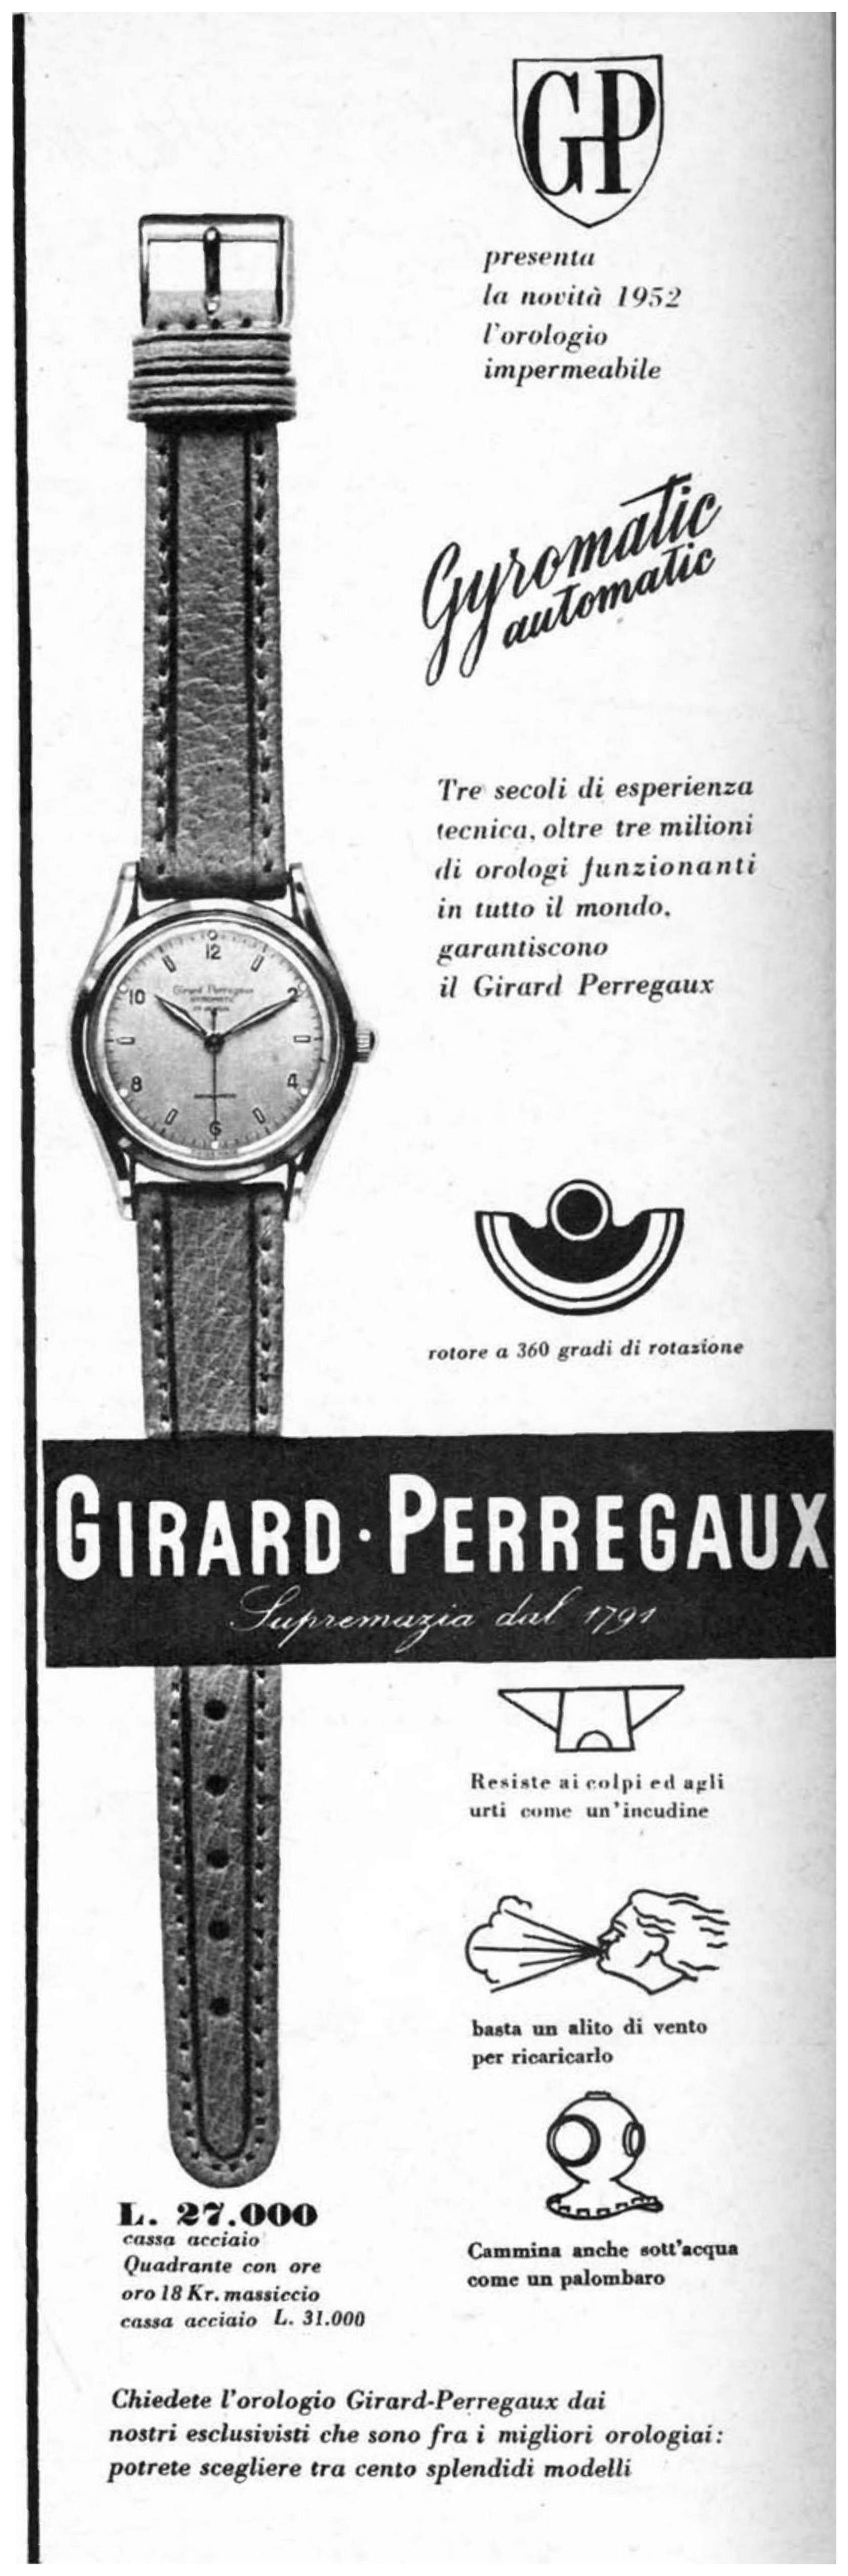 Girard-Perregaux 1952 63.jpg